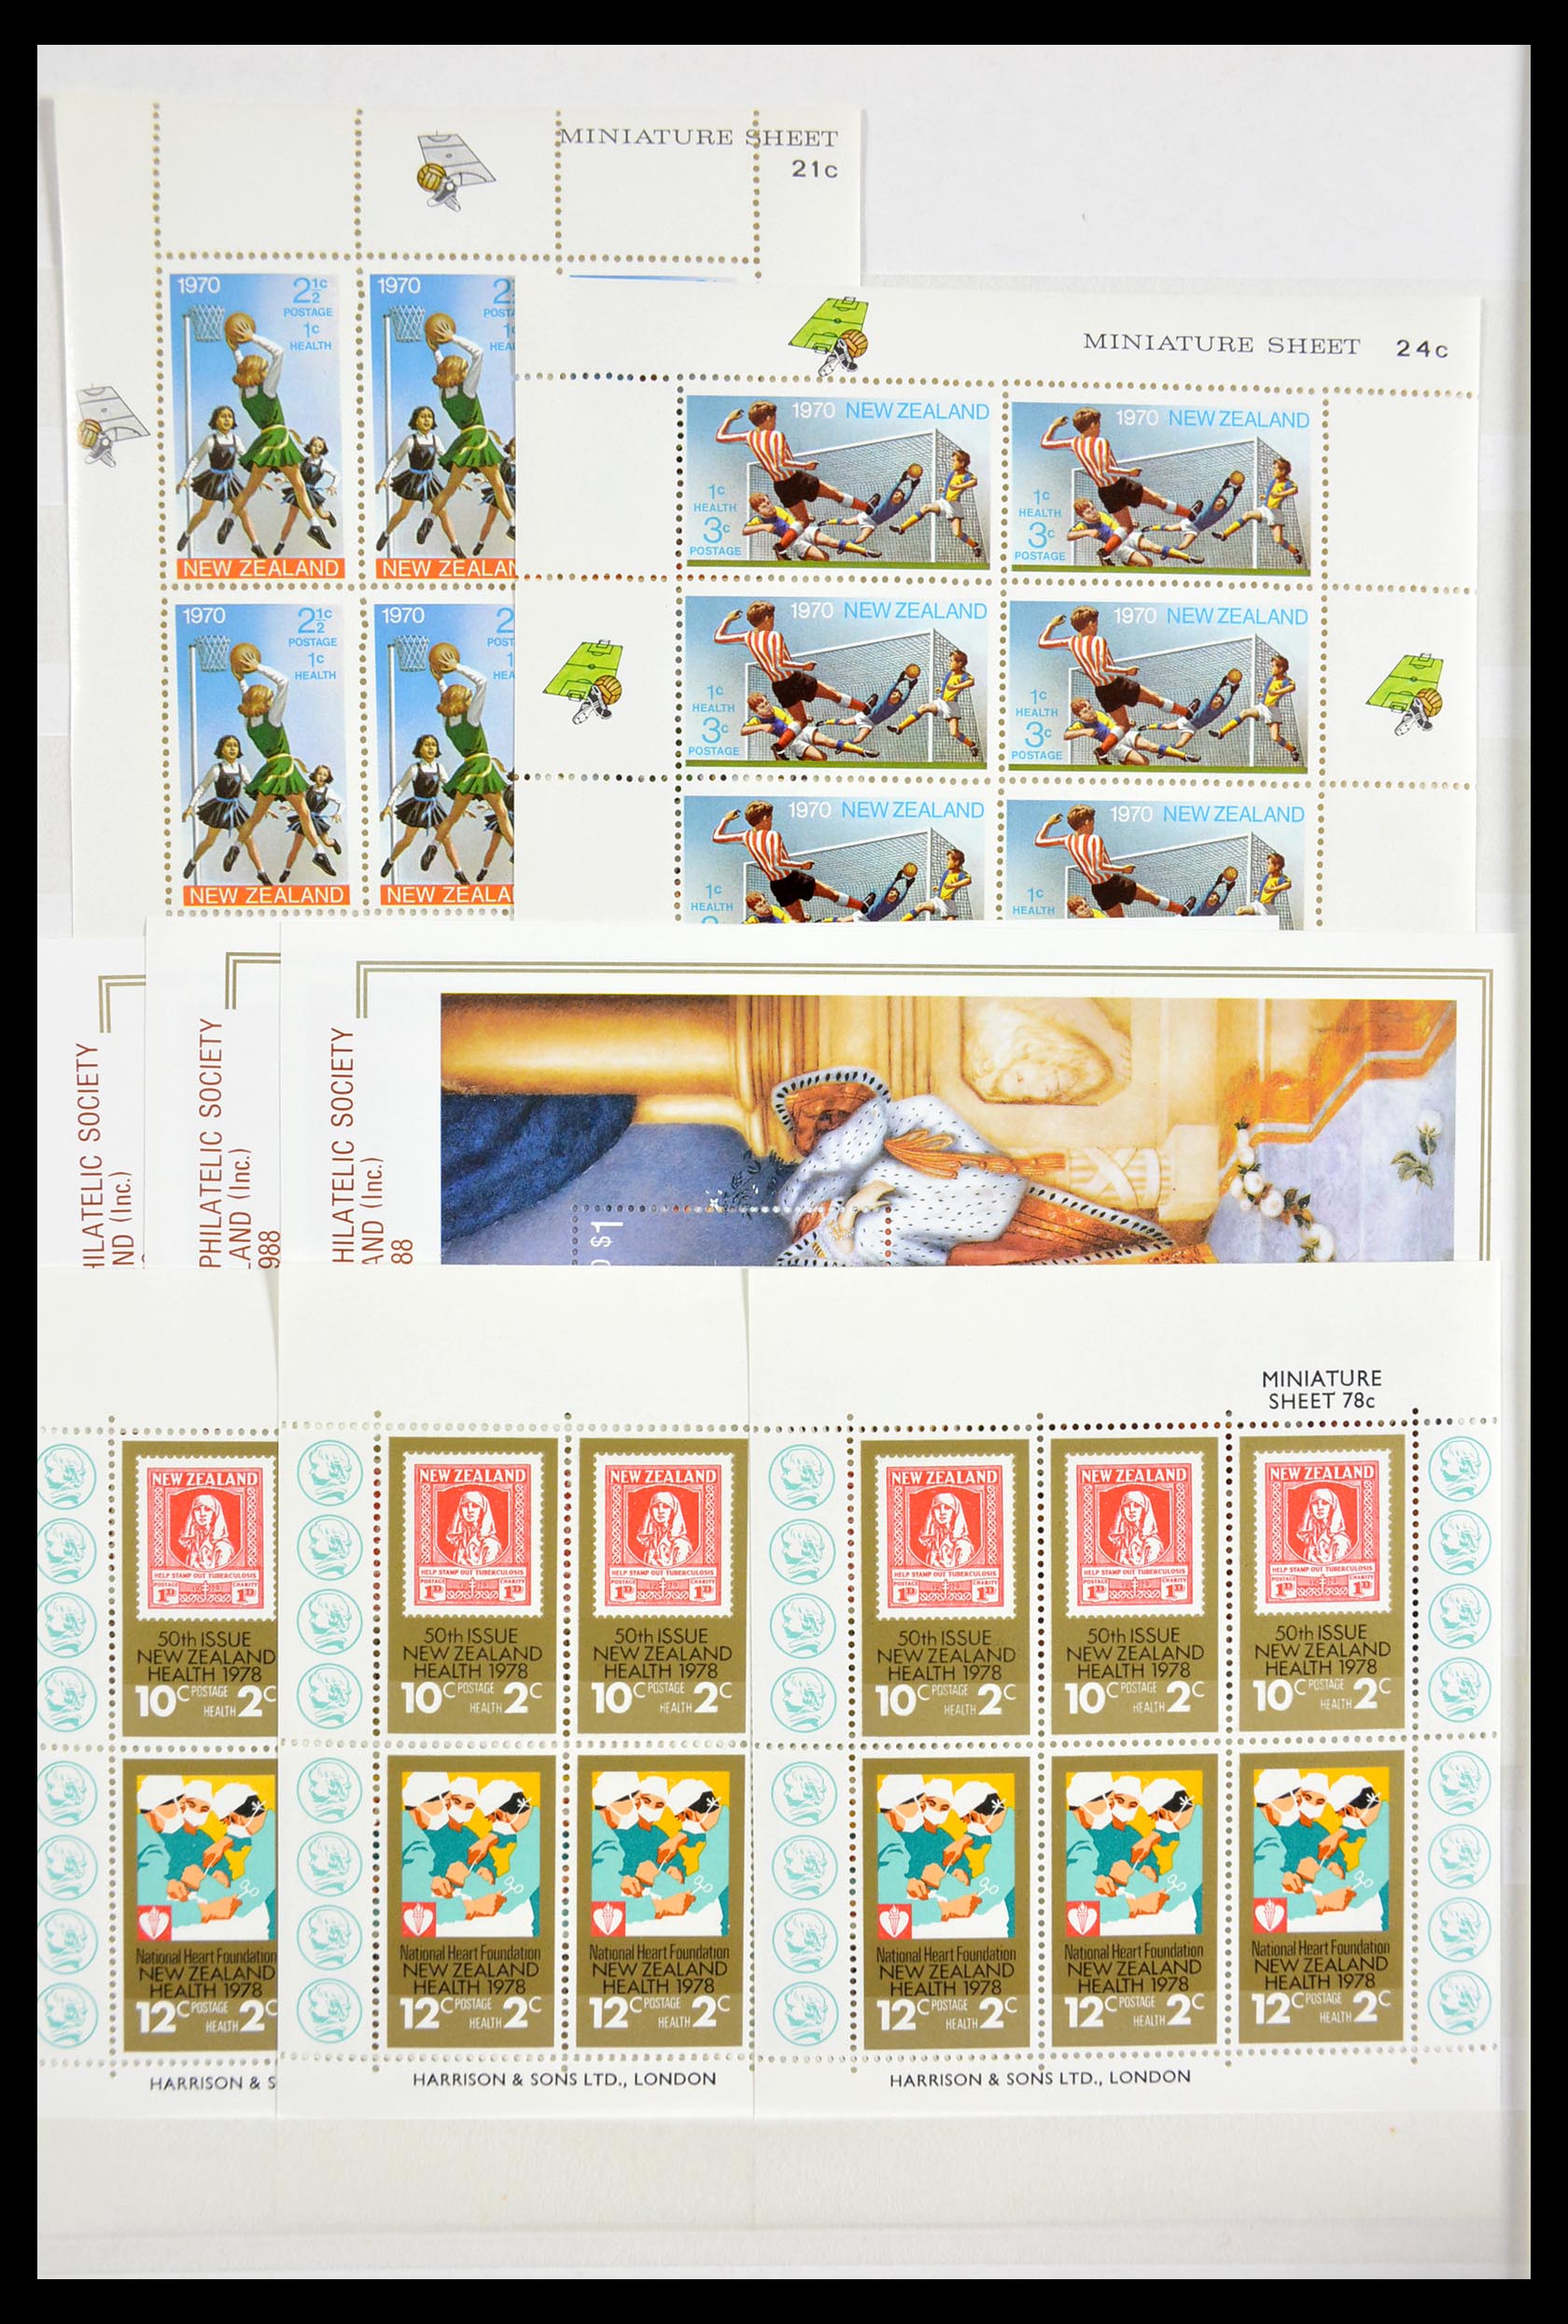 29584 075 - 29584 World souvenir sheets 1980-2011.